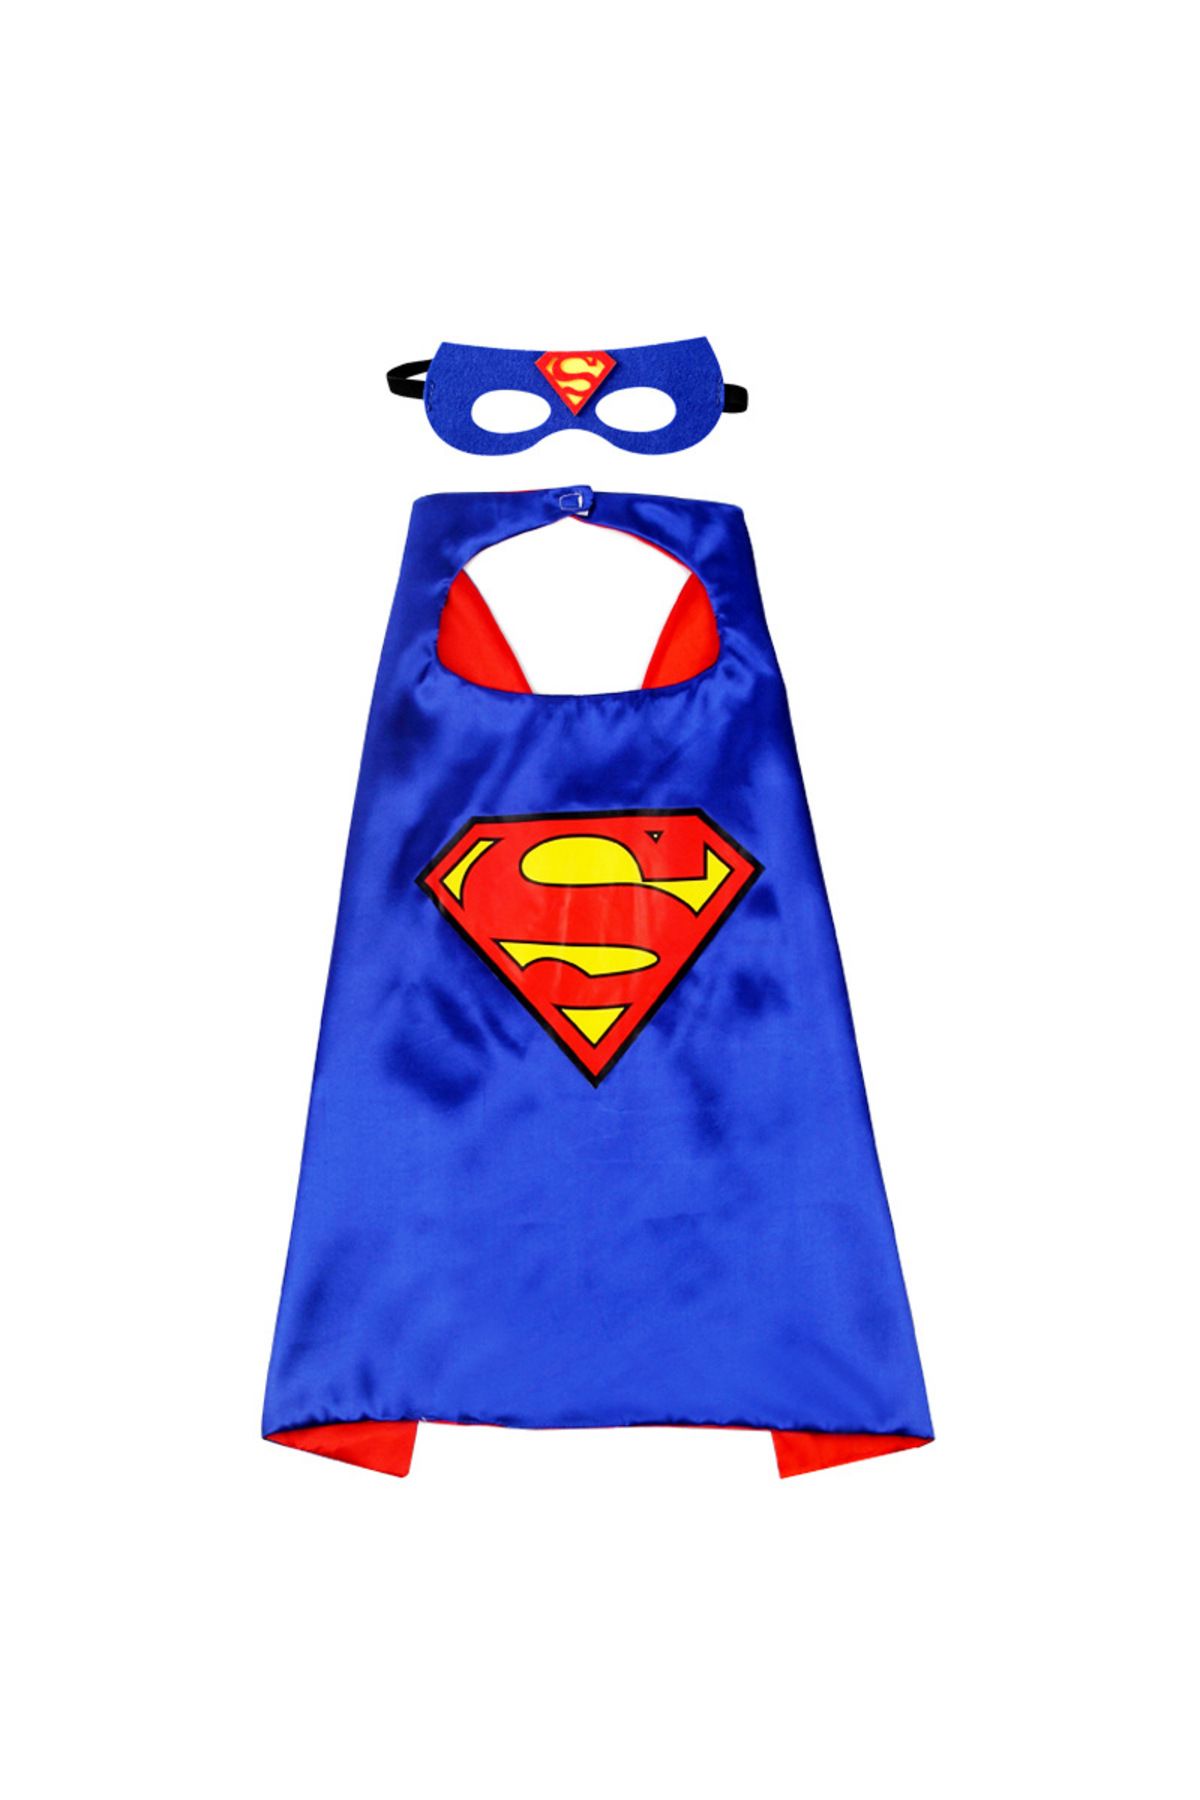 Toptan Bulurum Superman Avengers Pelerin Maske Kostüm Seti 70x70 Cm (4209)